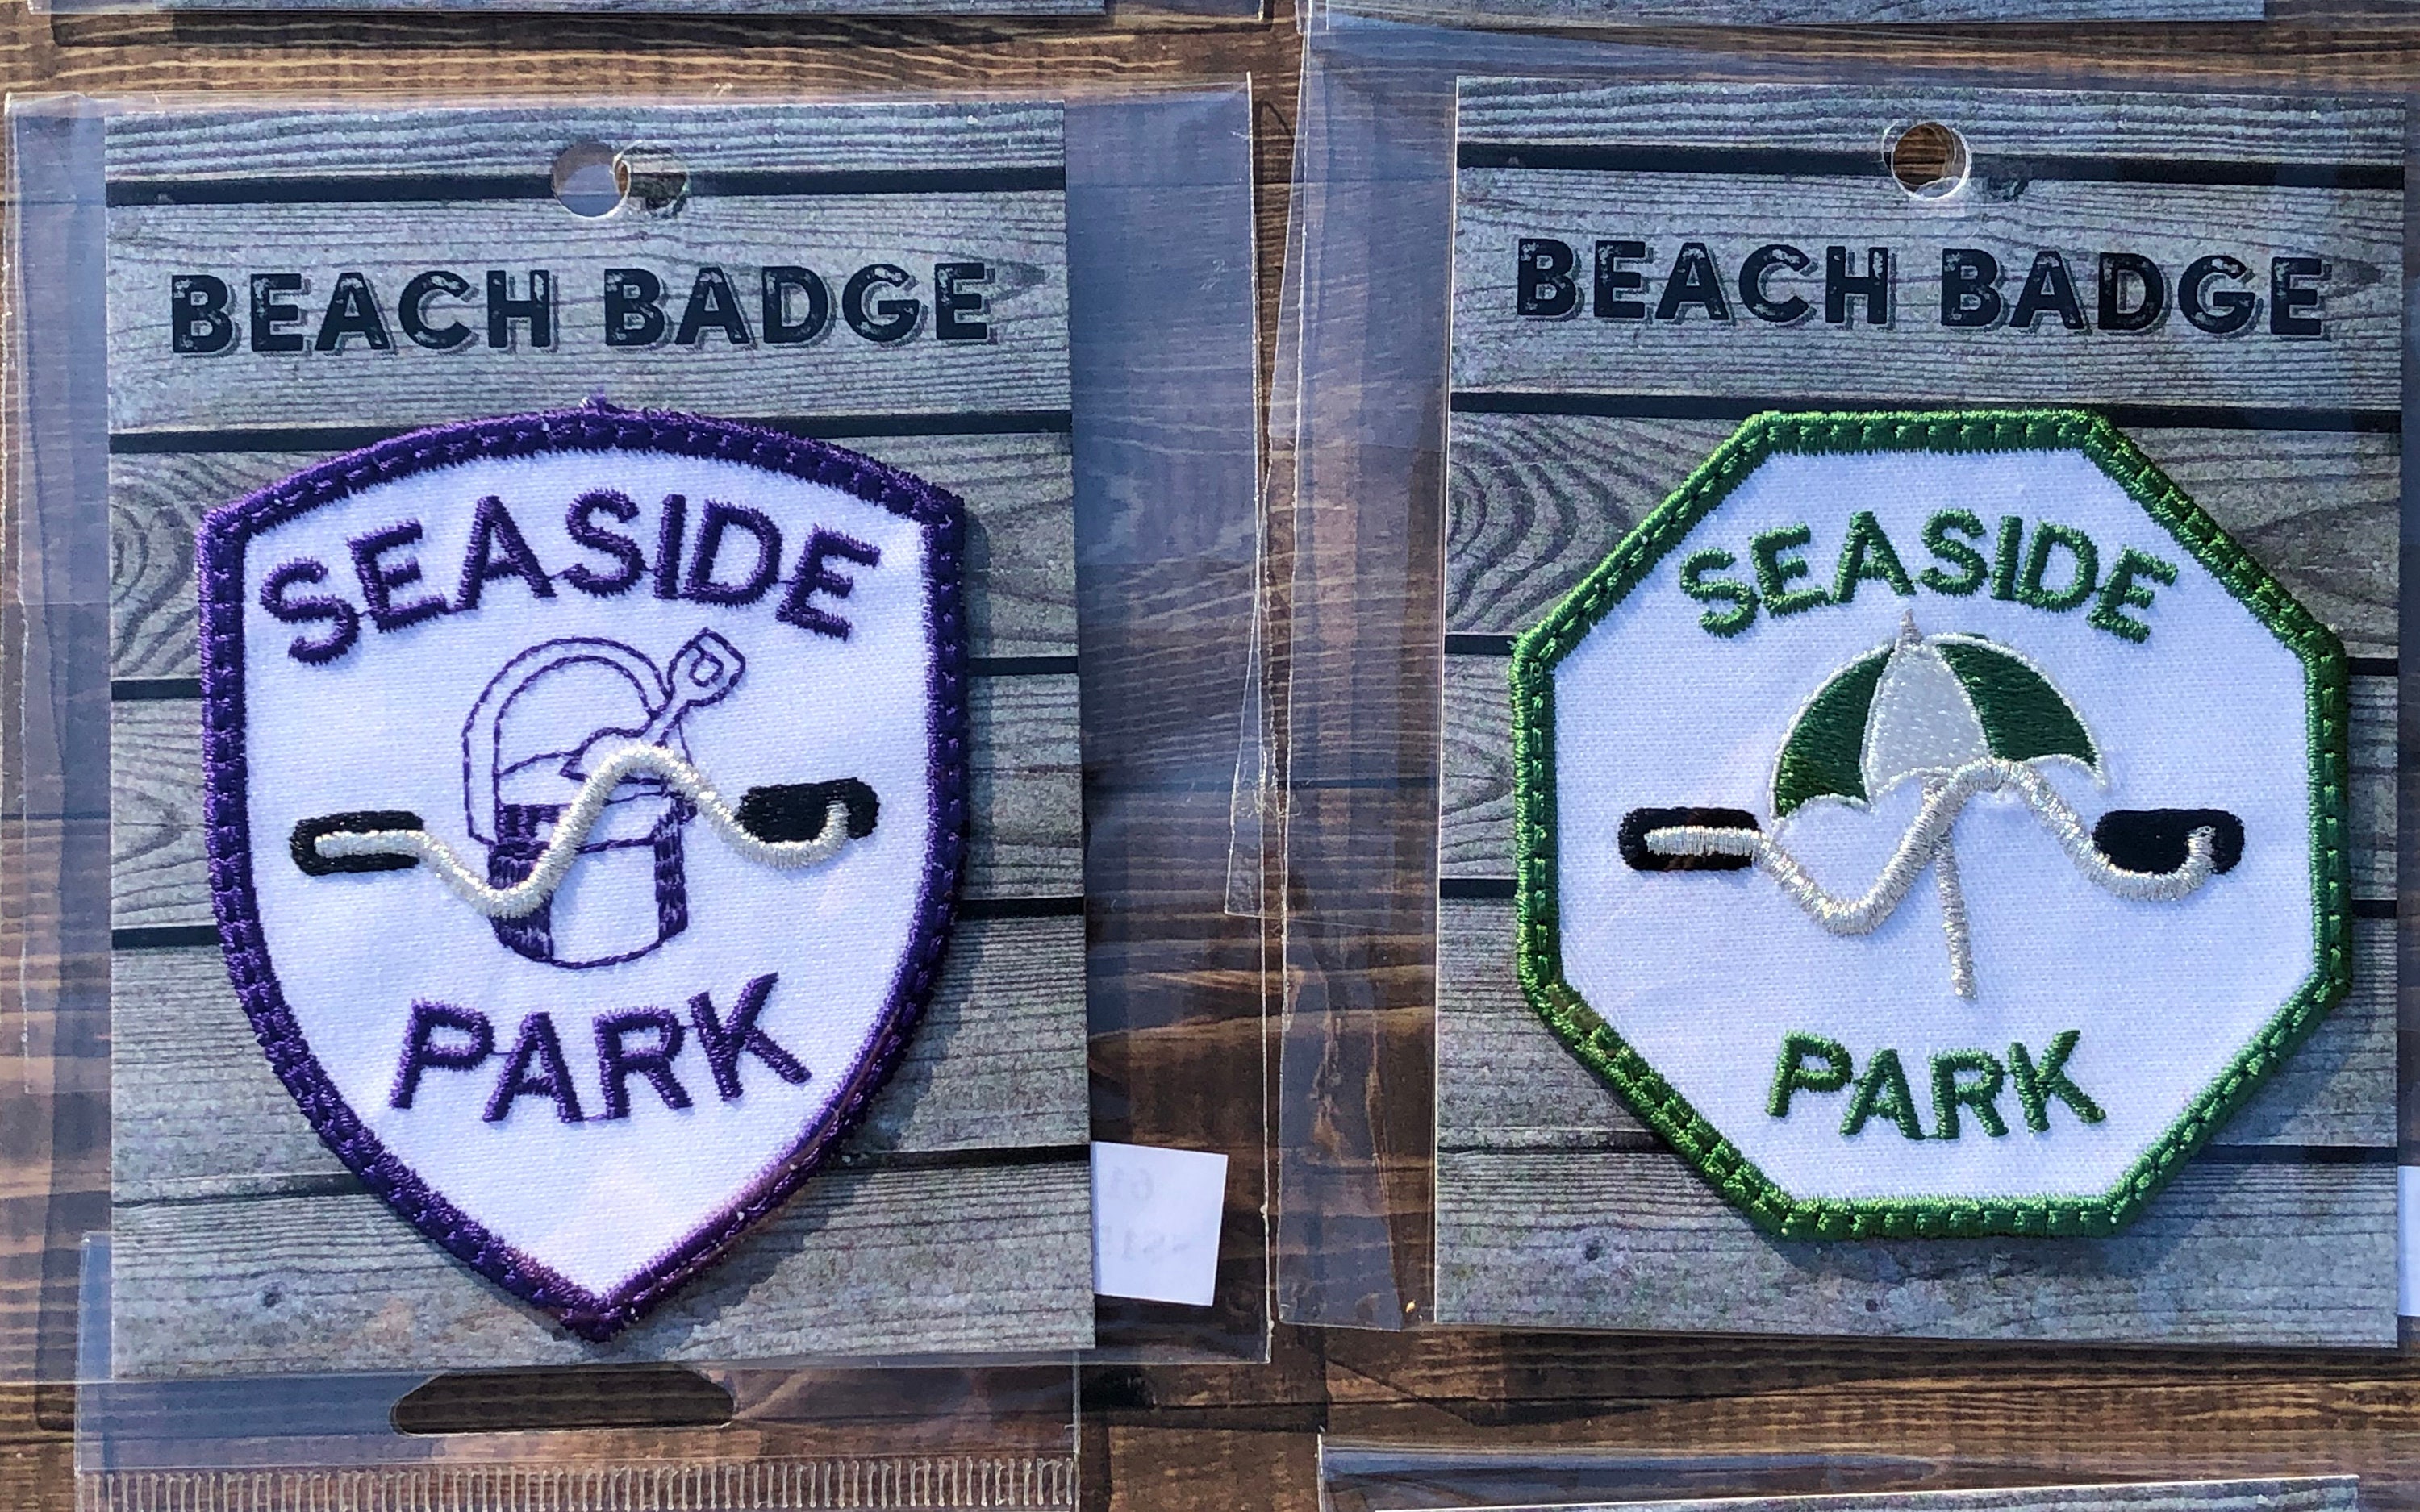 3 Beach Badge Iron on Patch Seaside Park Seaside Etsy